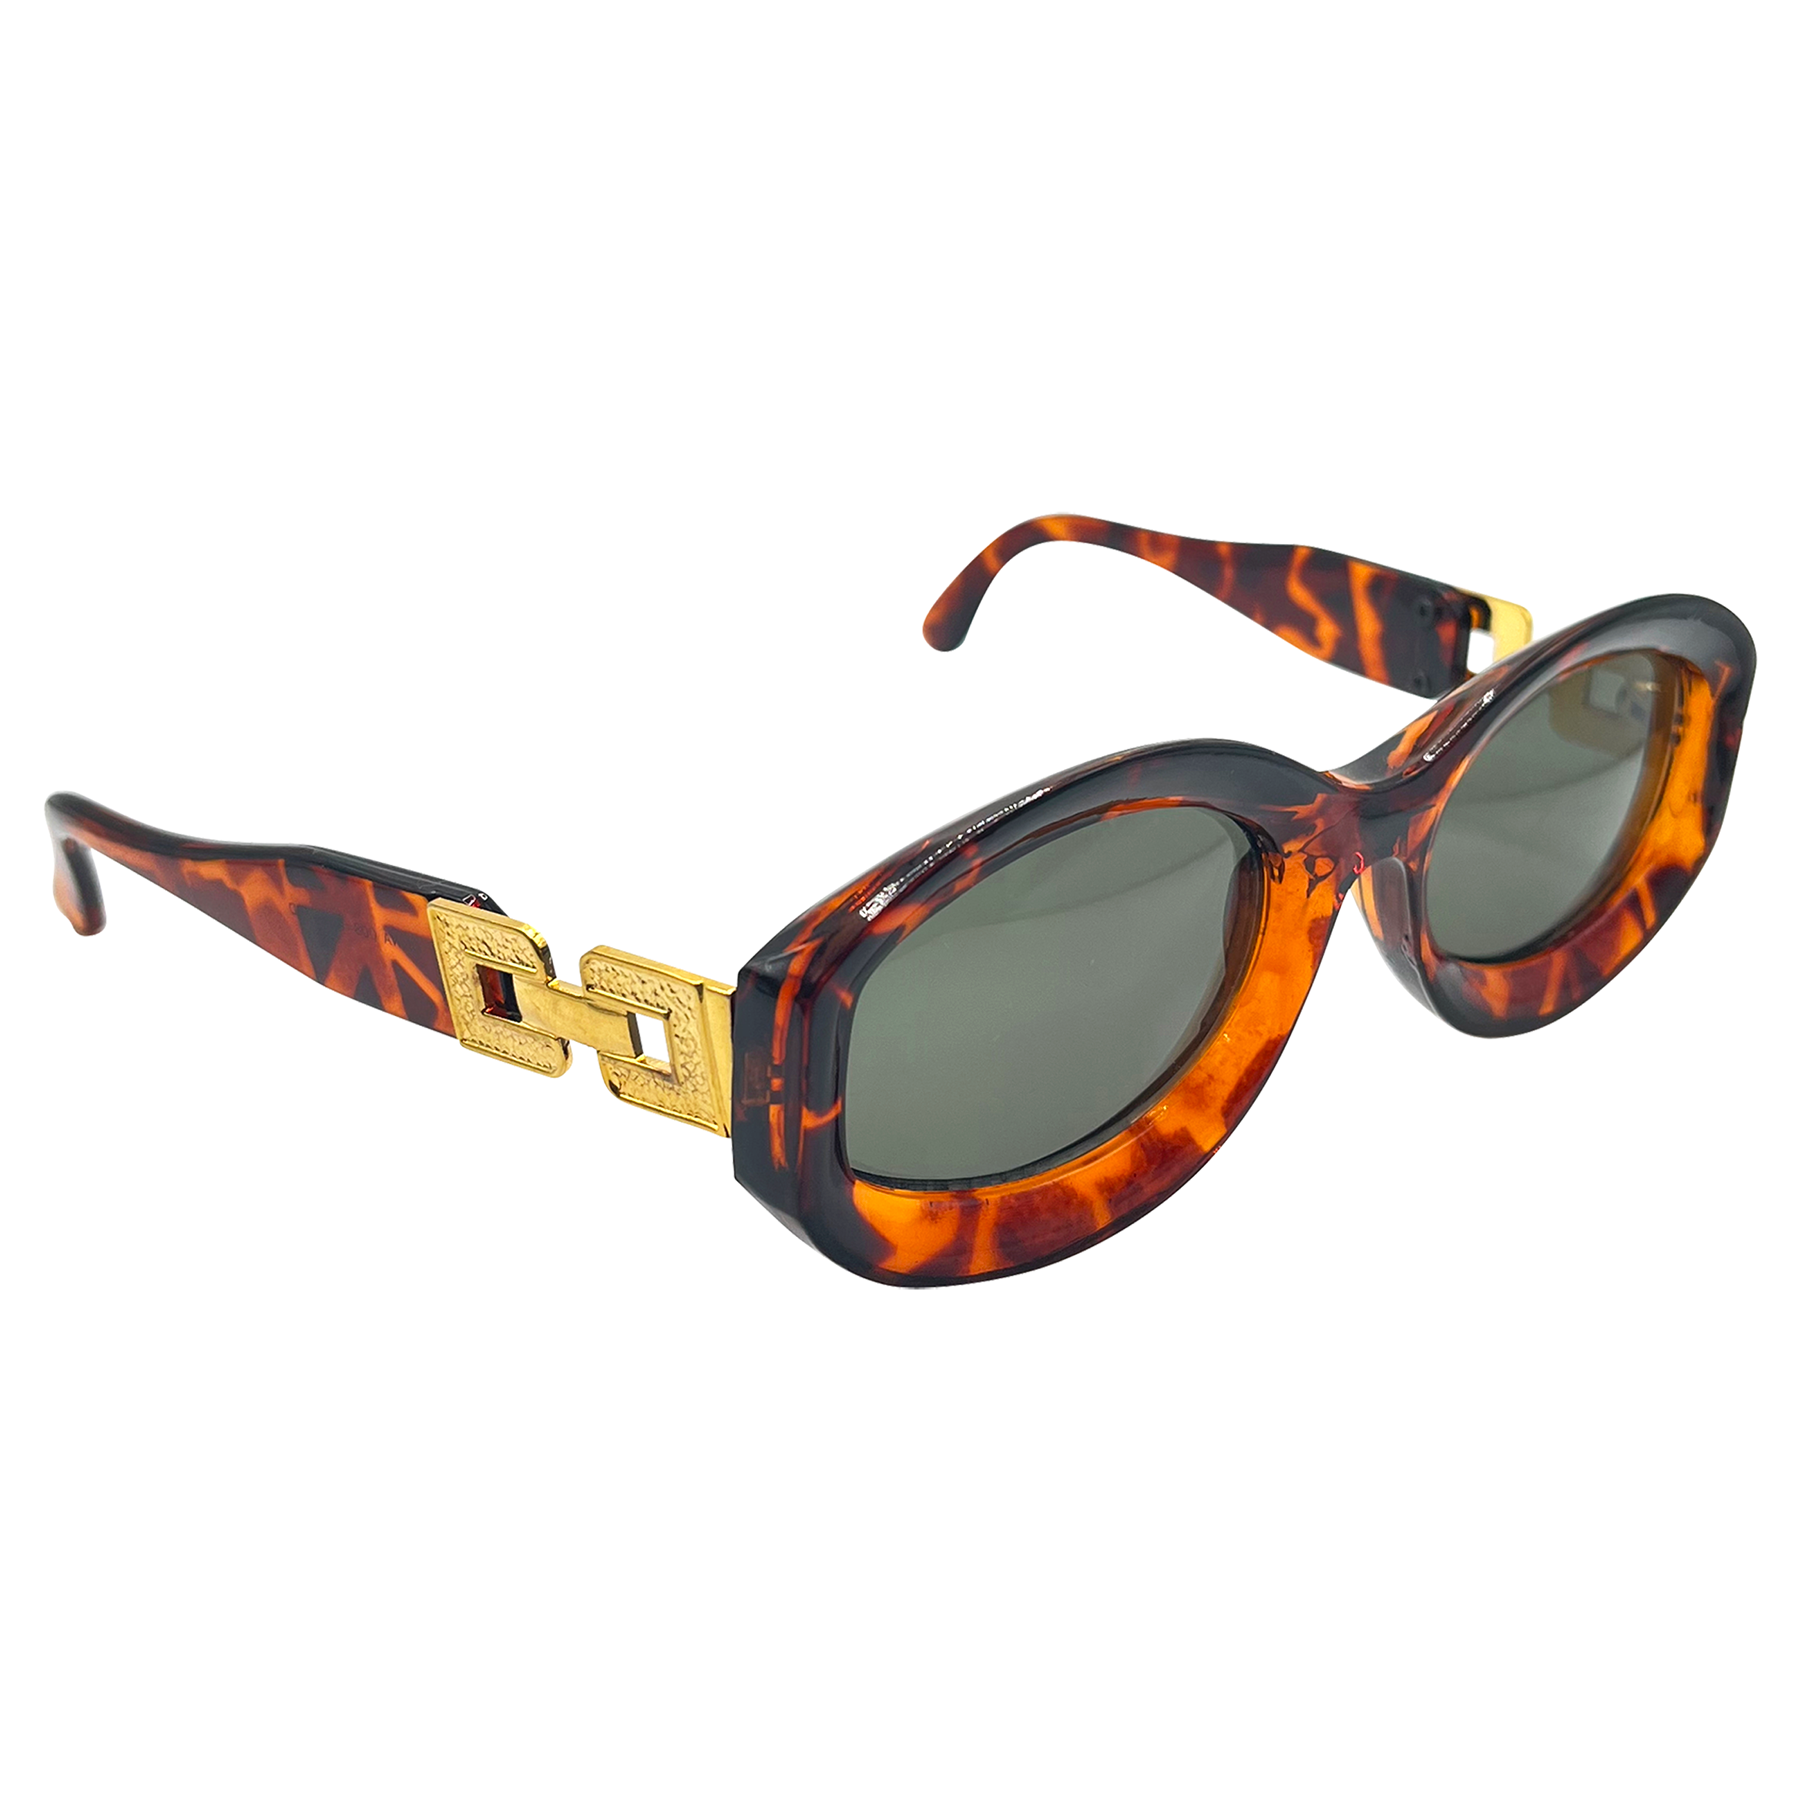 KIKA Tortoise/G15 Mod Square Sunglasses